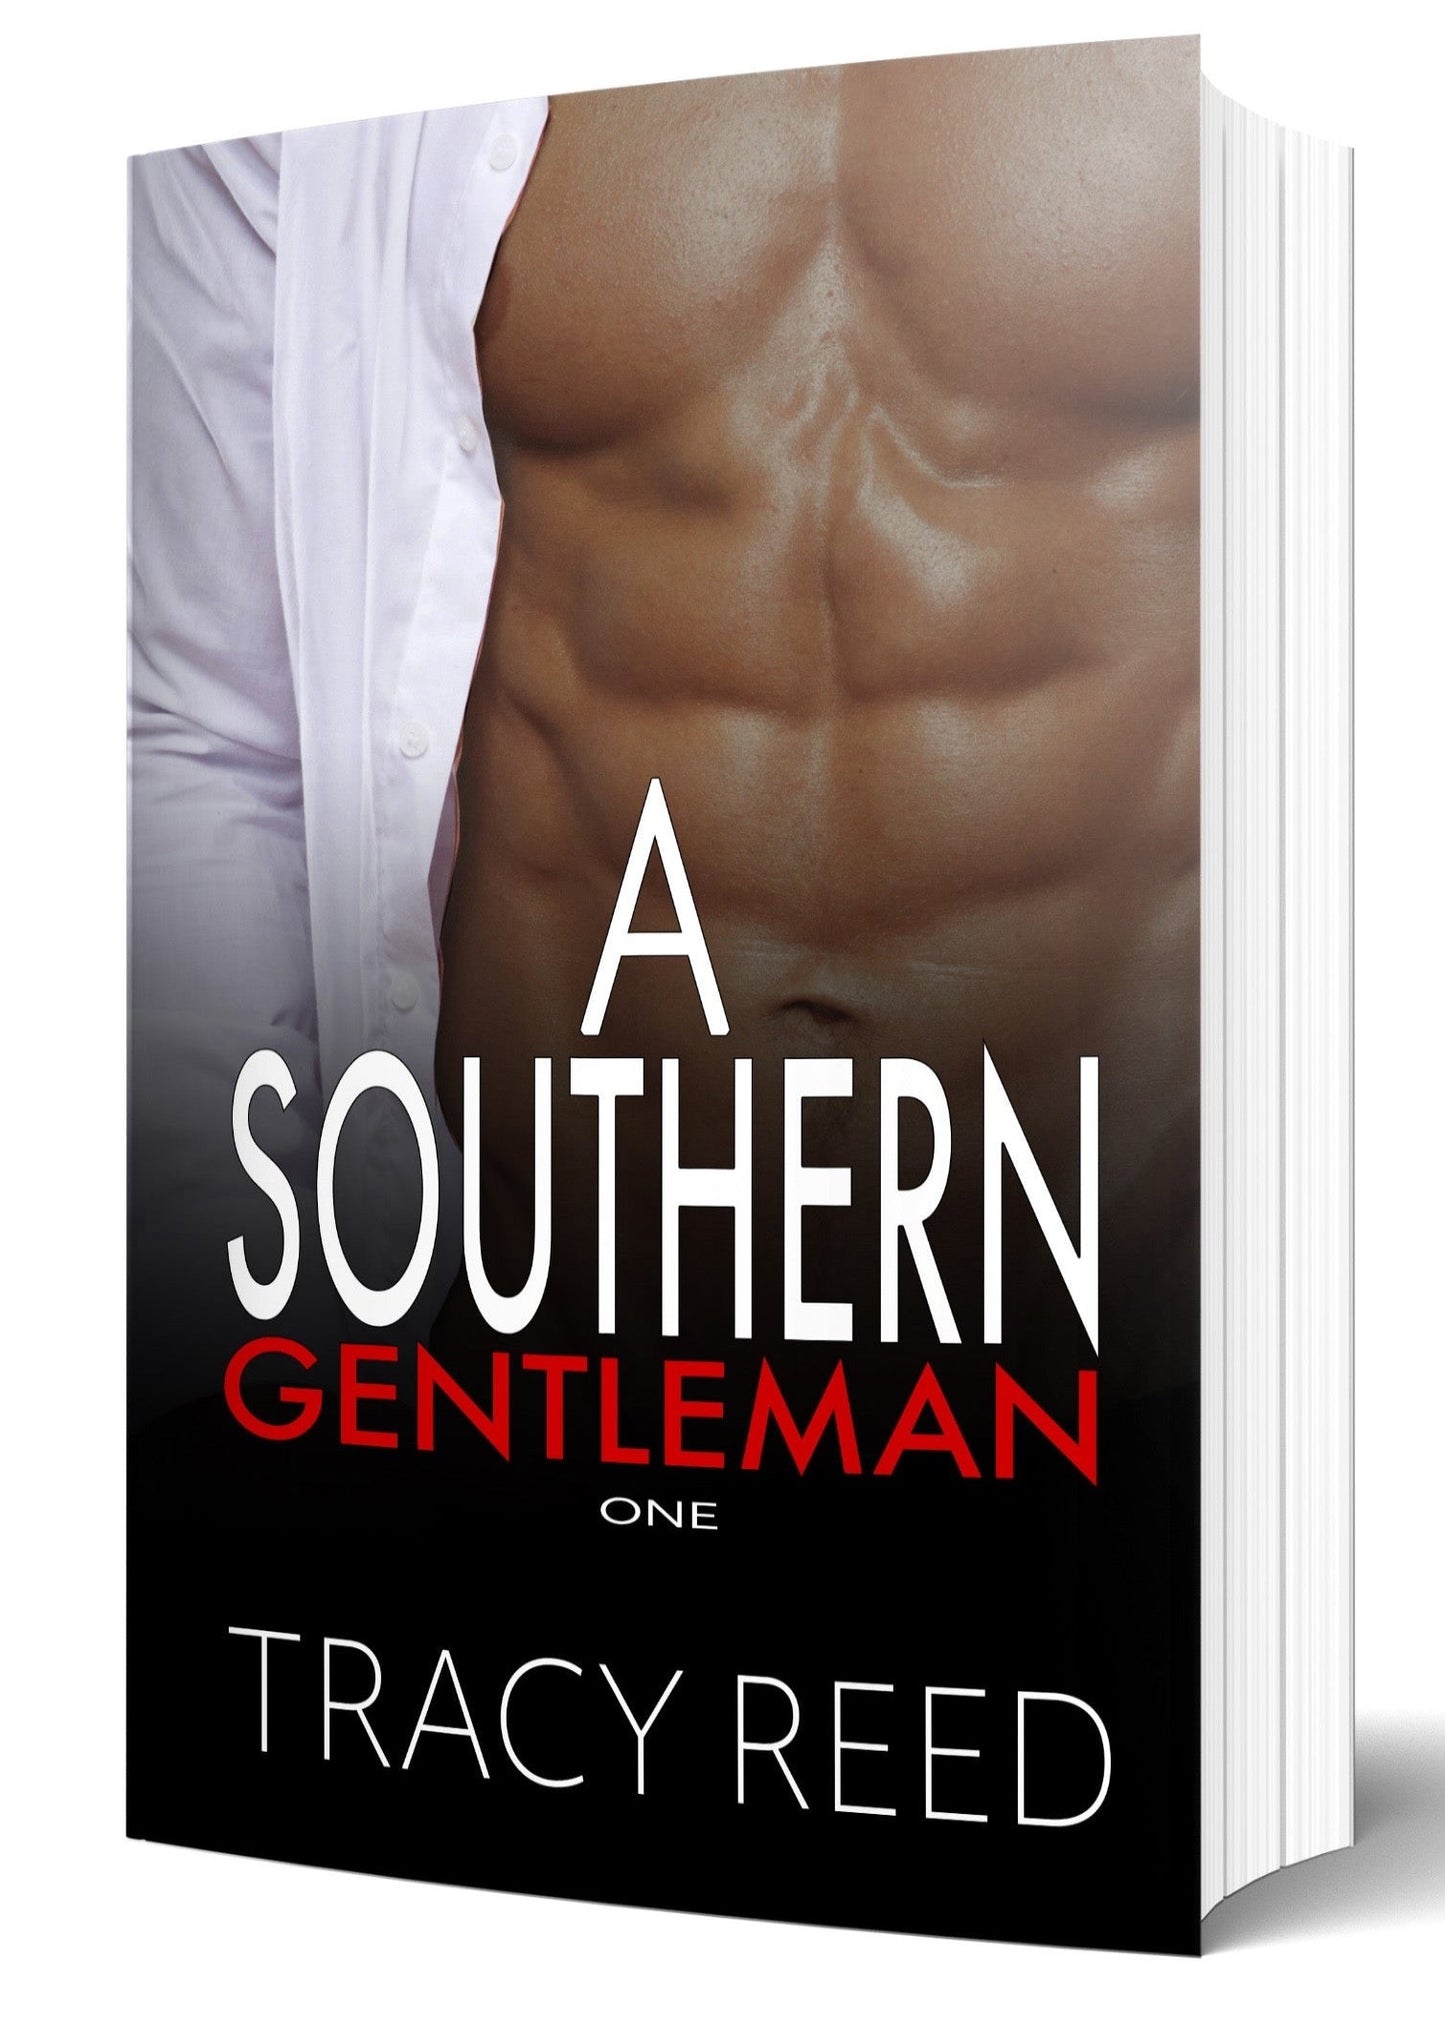 A Southern Gentleman Vol One